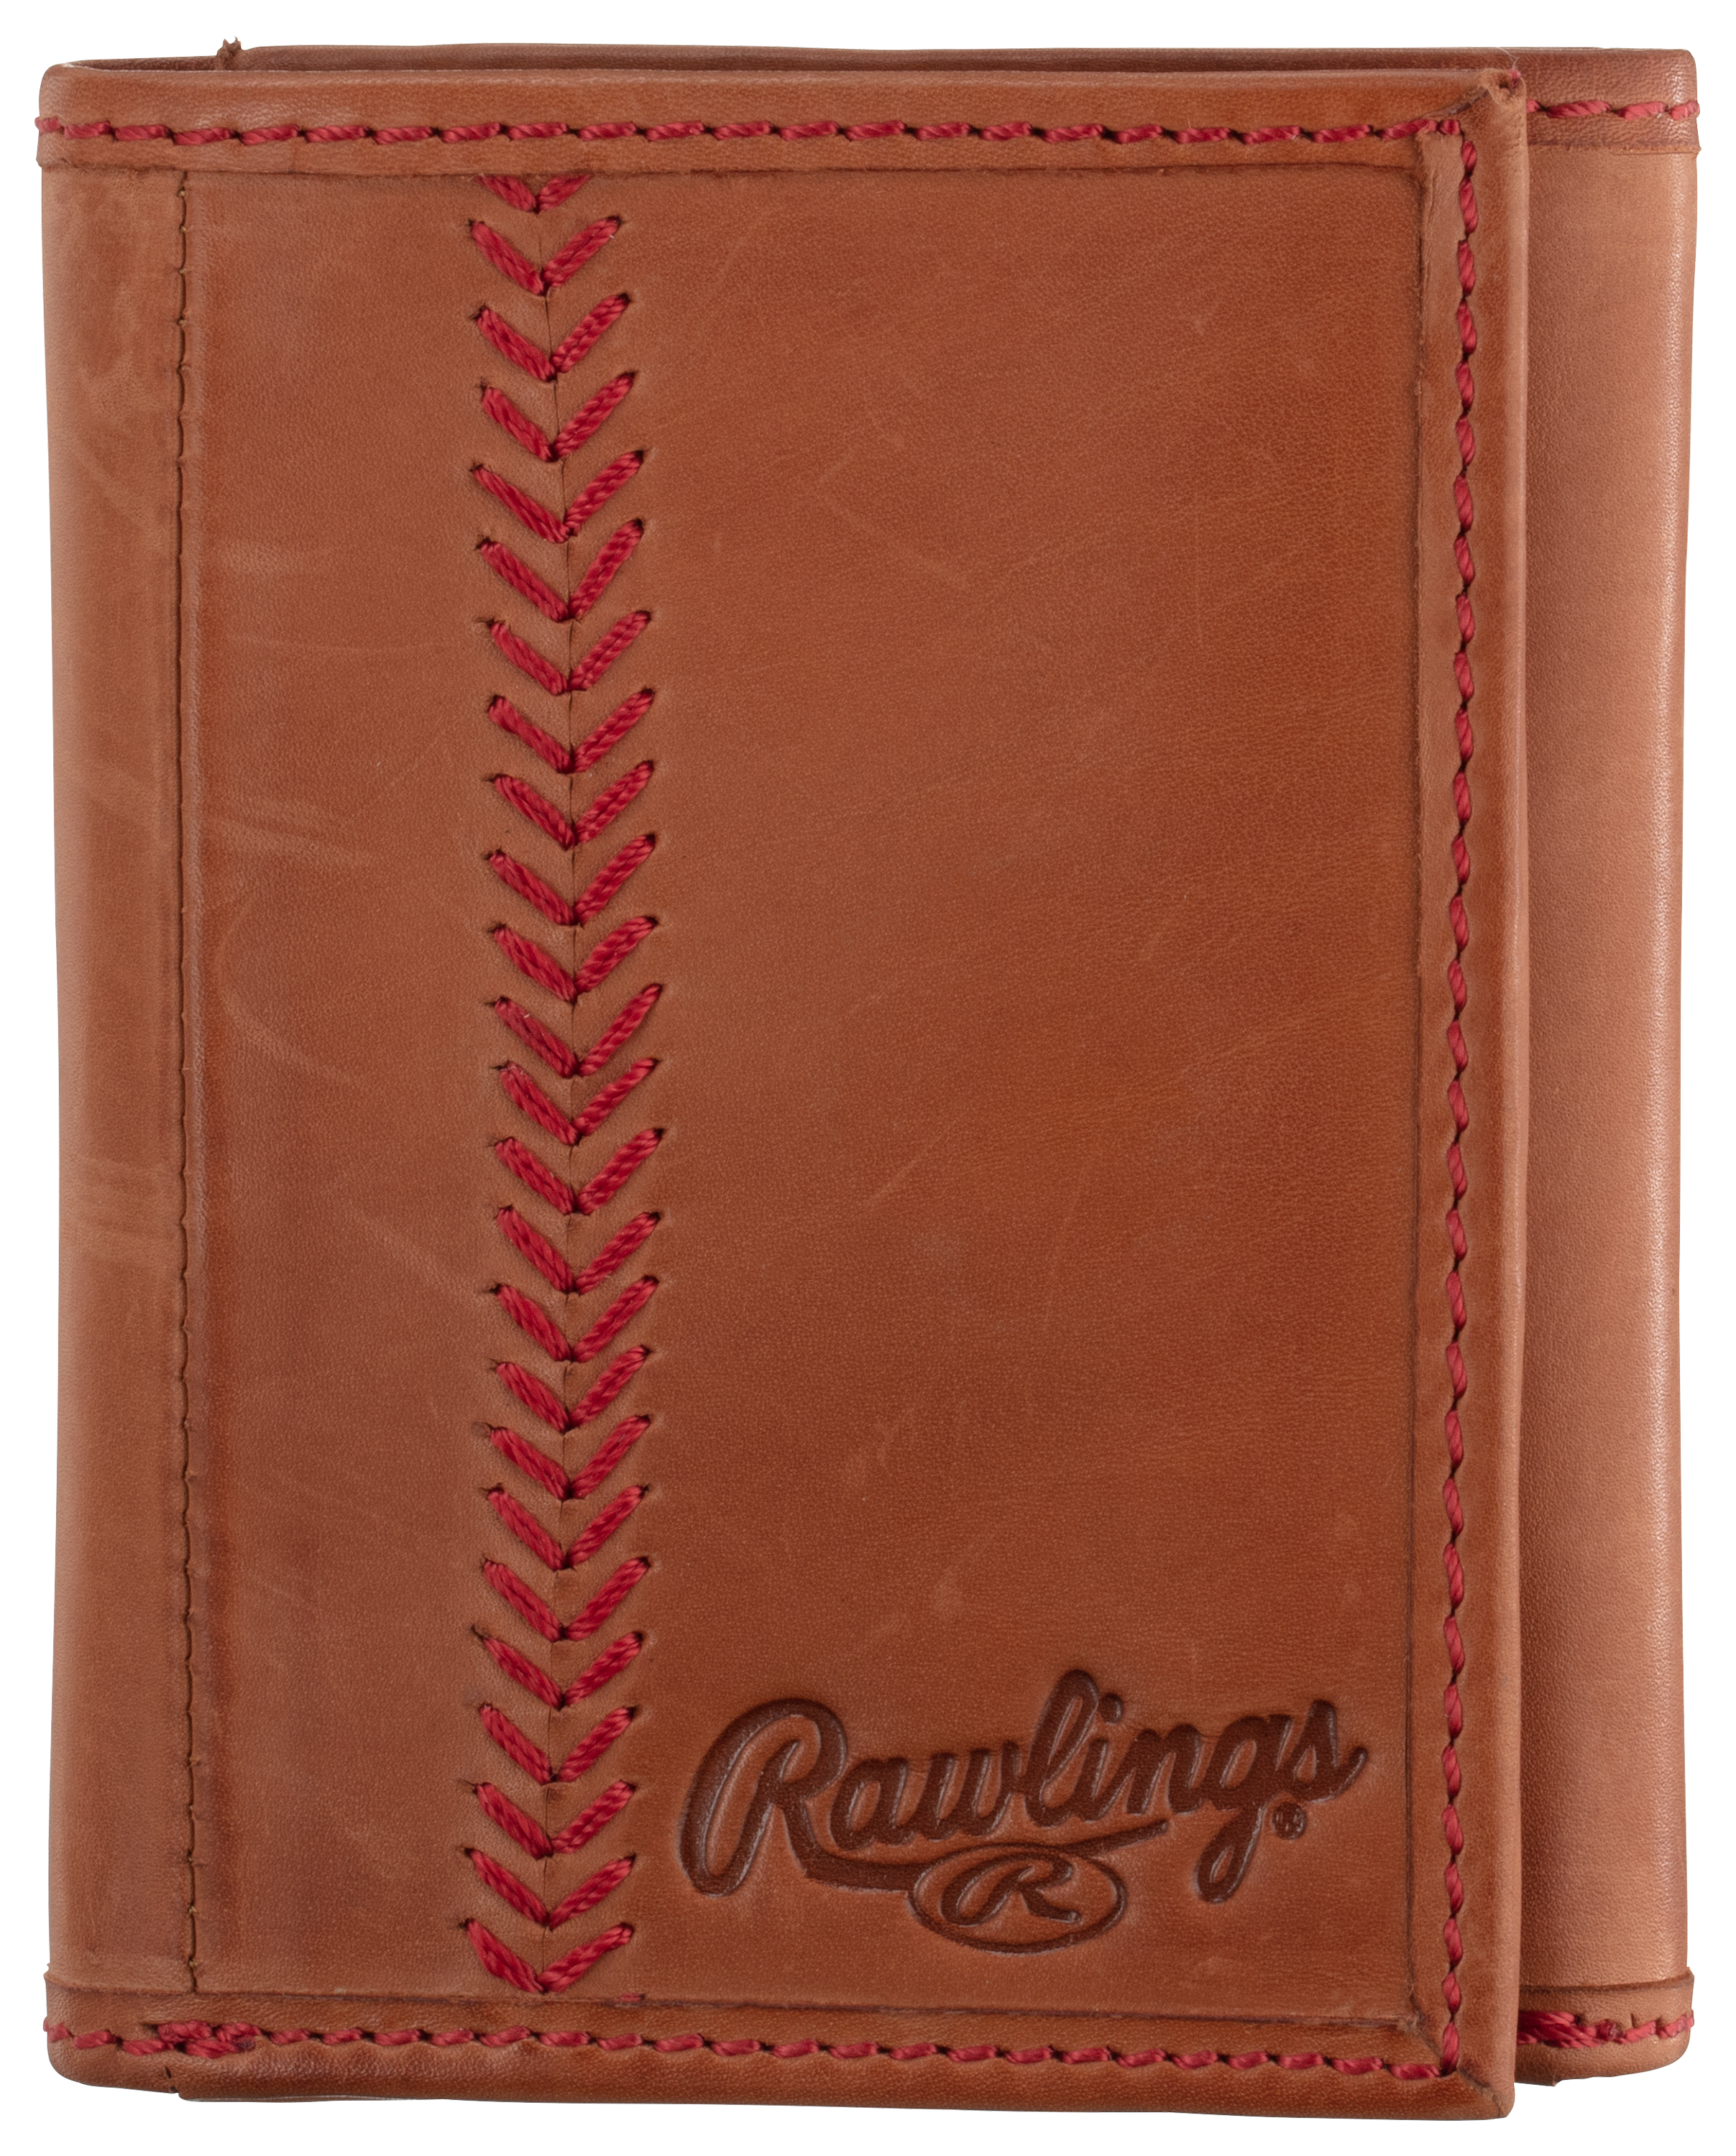 Rawlings Baseball Stitch Leather Trifold Wallet